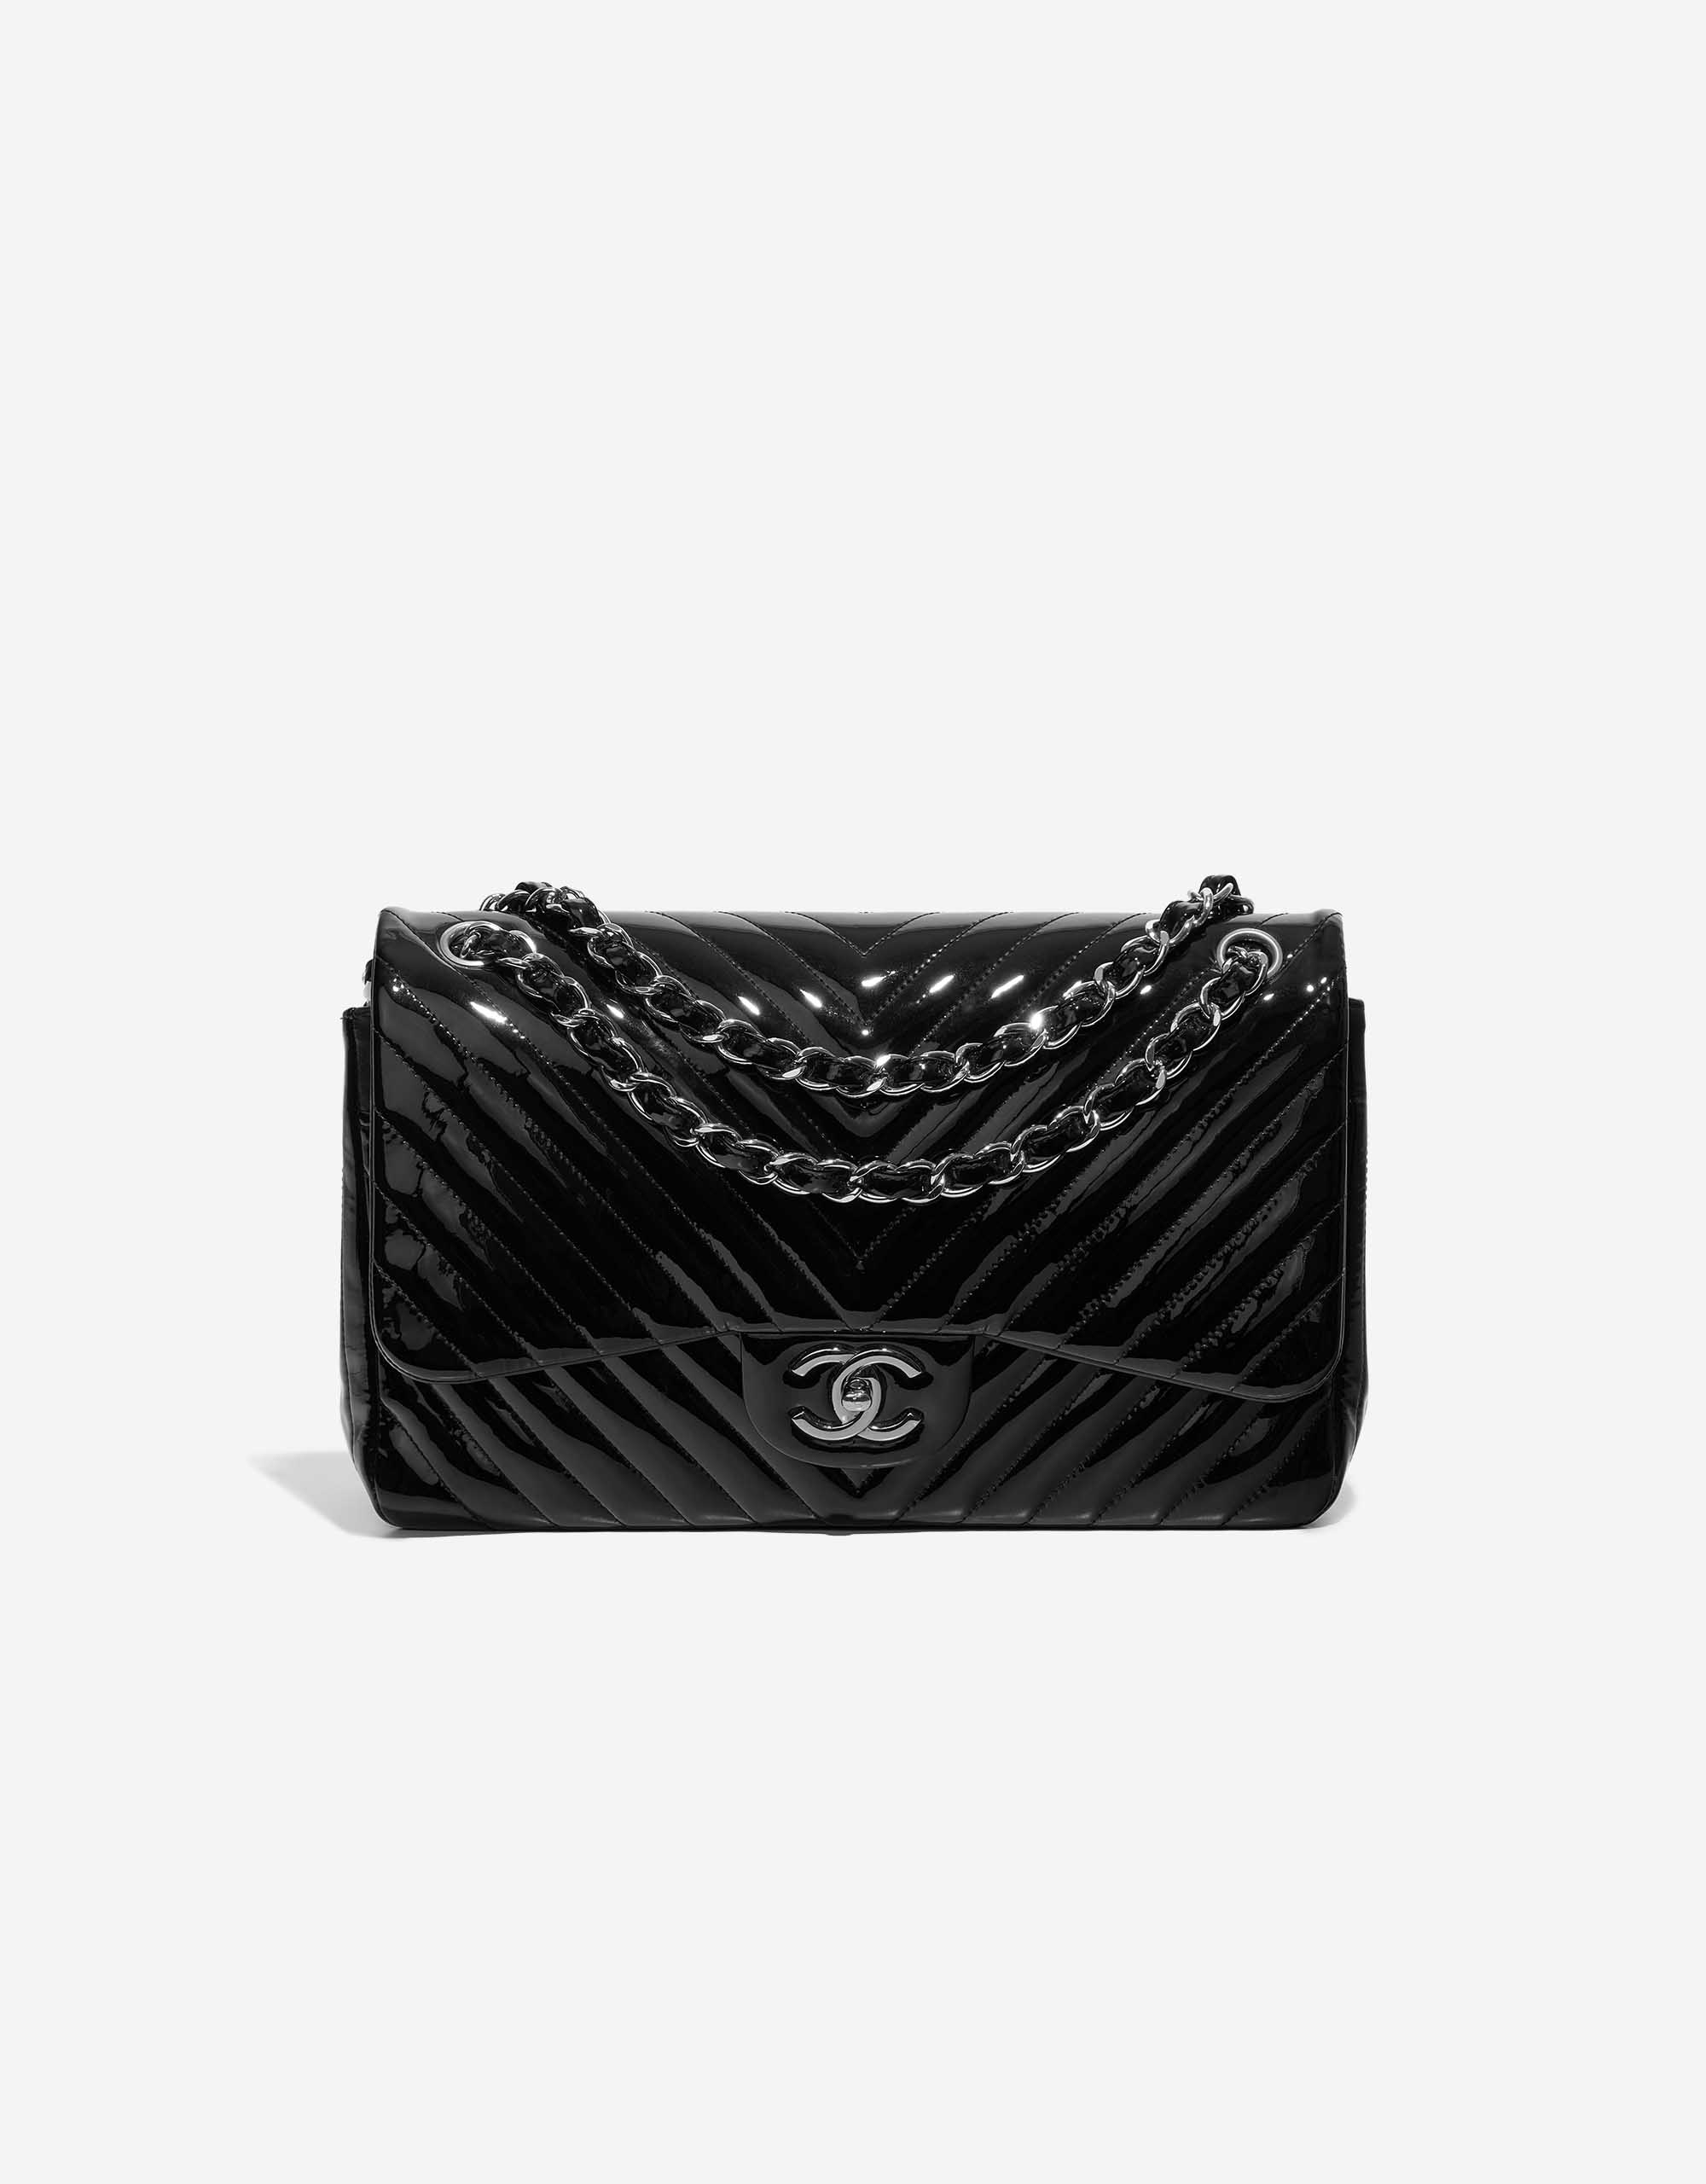 Chanel Timeless Jumbo Patent Leather Black | SACLÀB